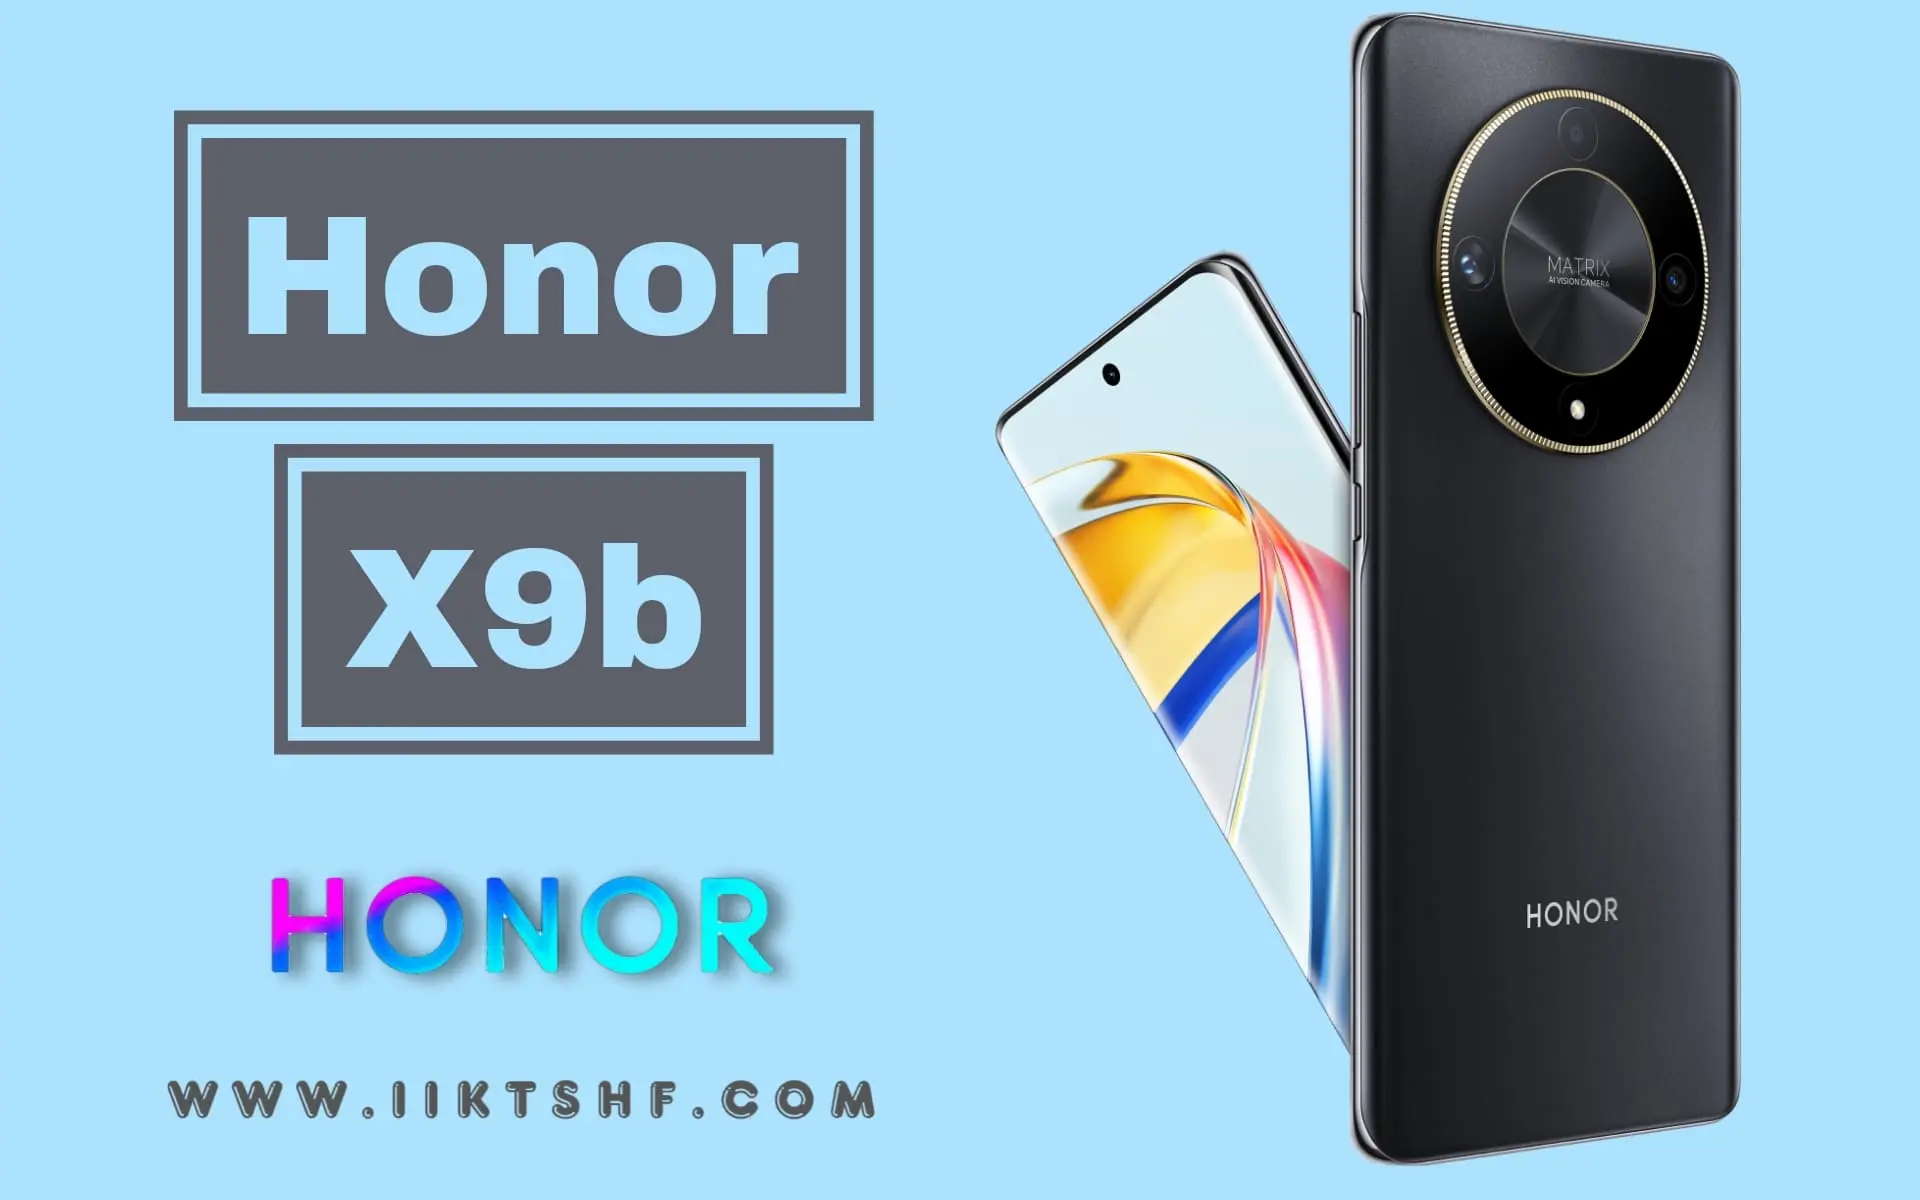 Honor X9b: جديد وفخم بمواصفات عالية